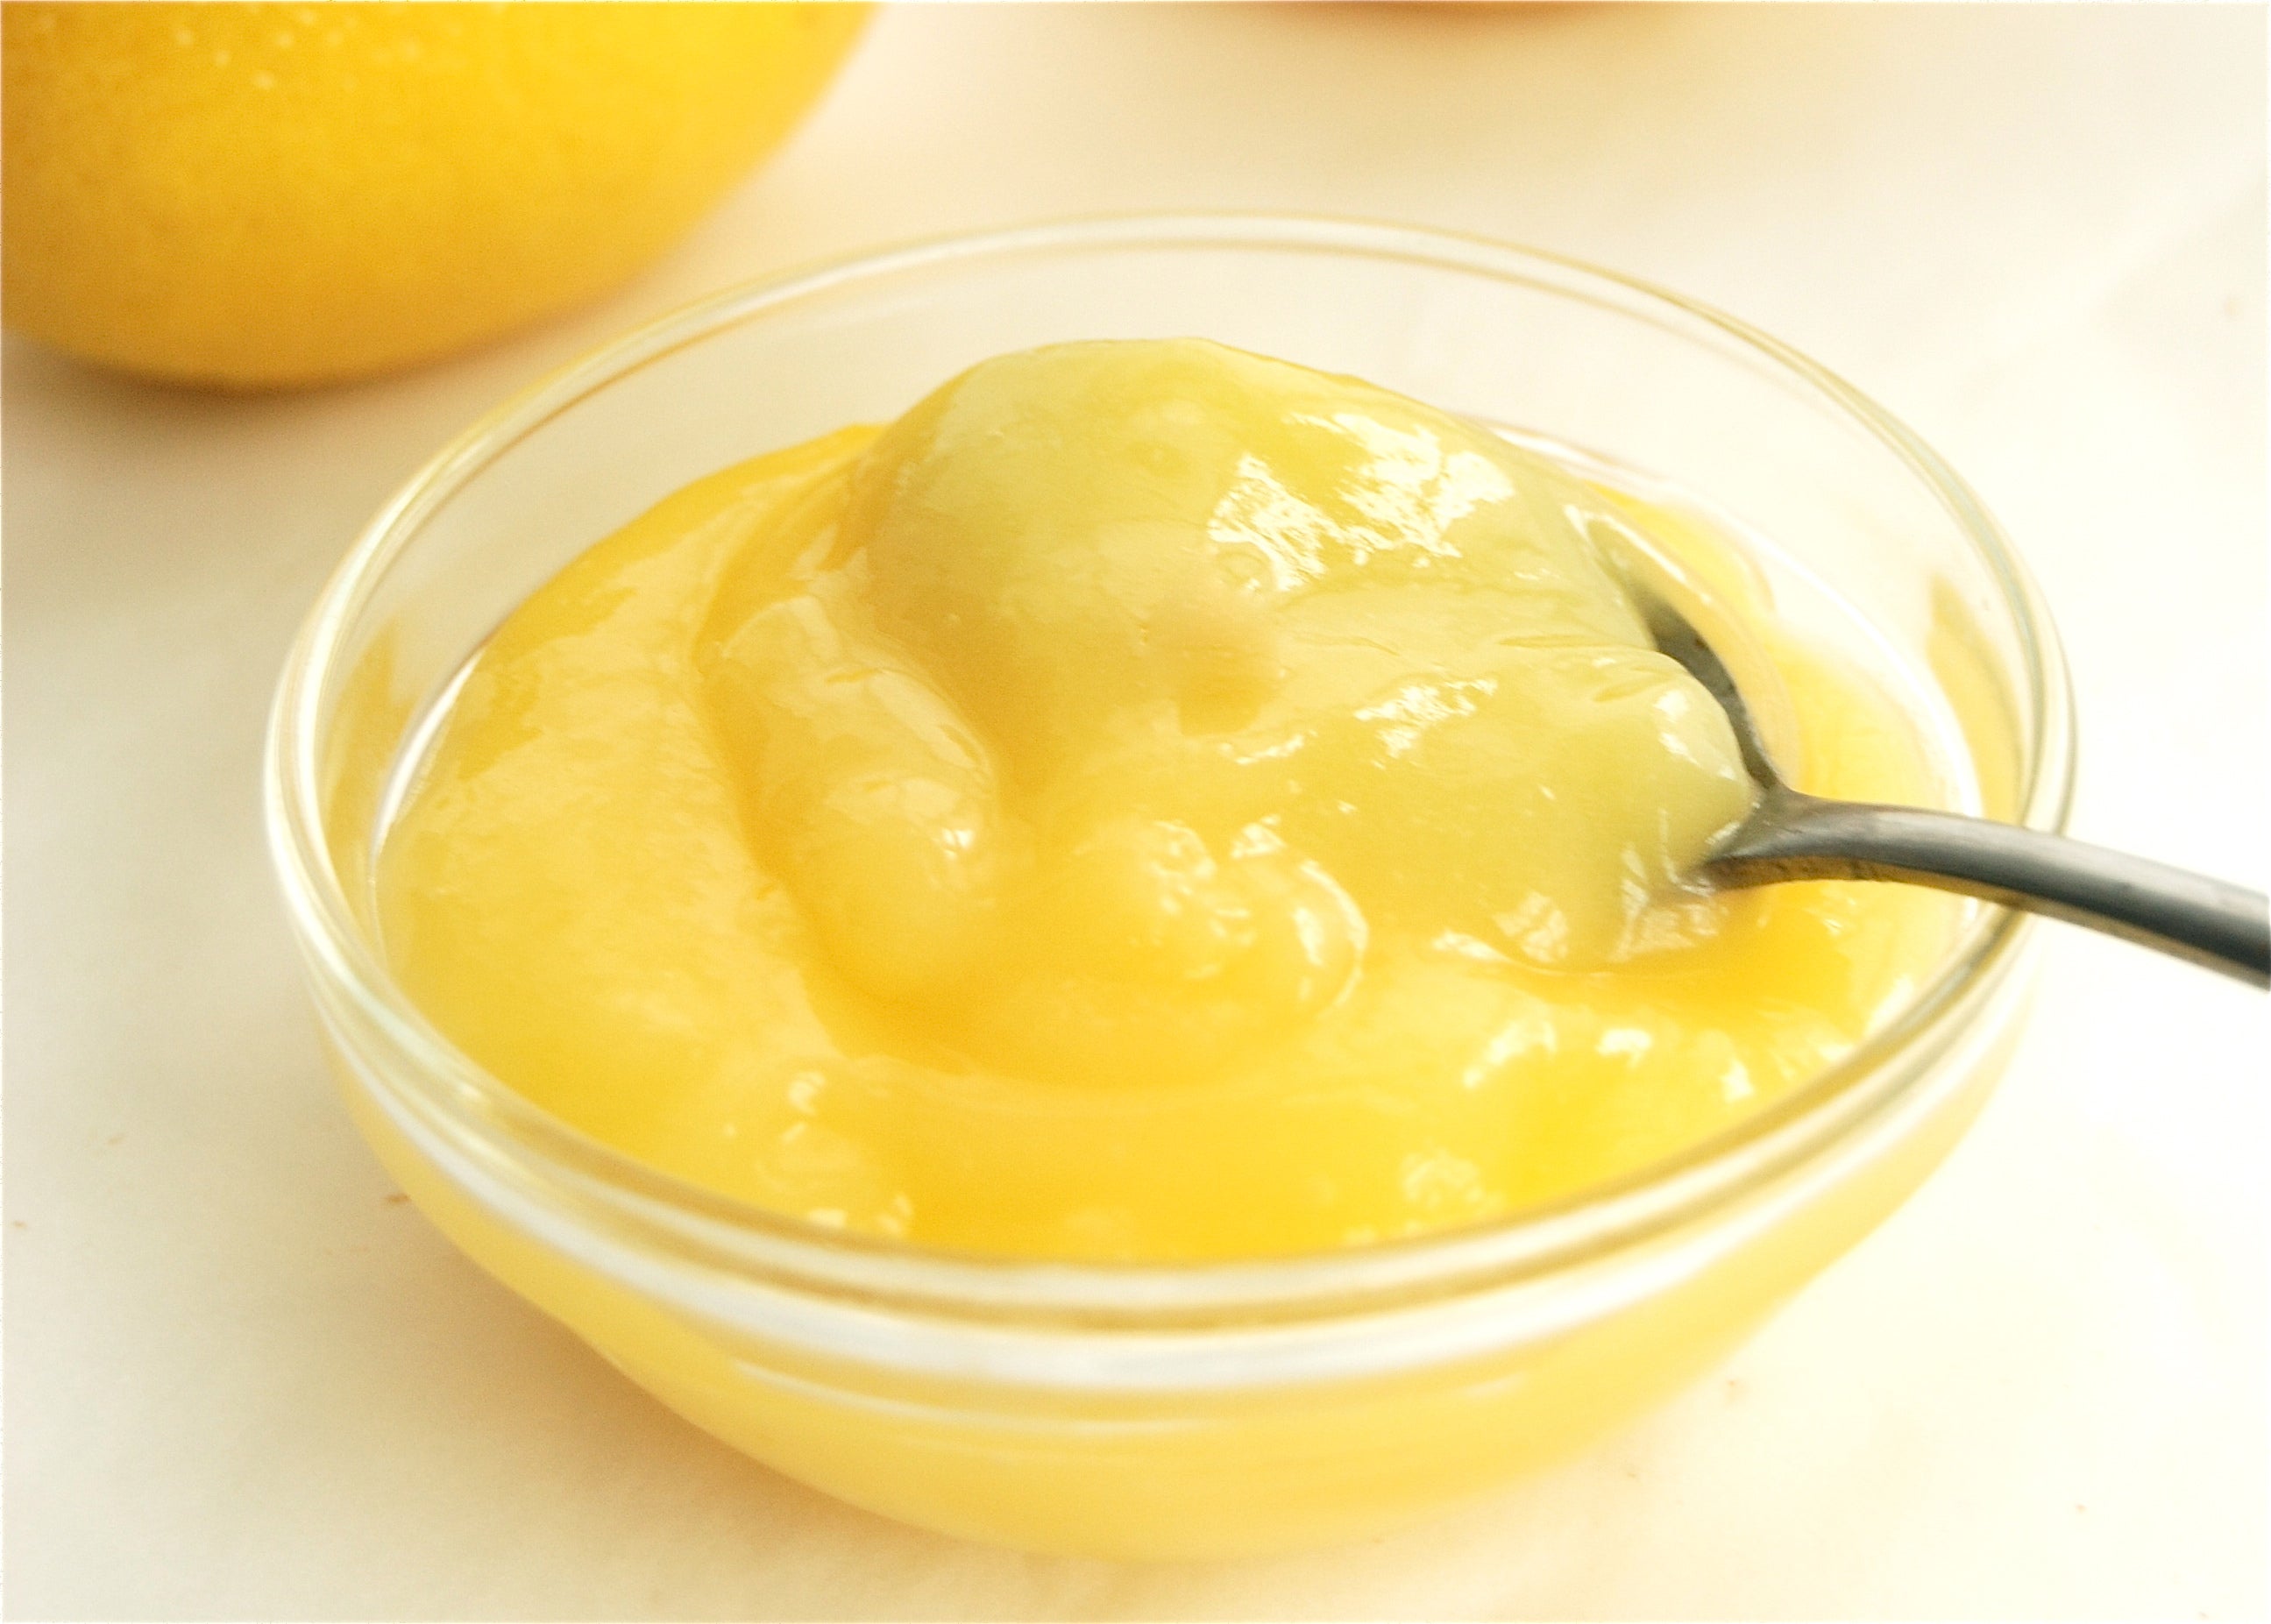 Homemade lemon curd in under 10 minutes.